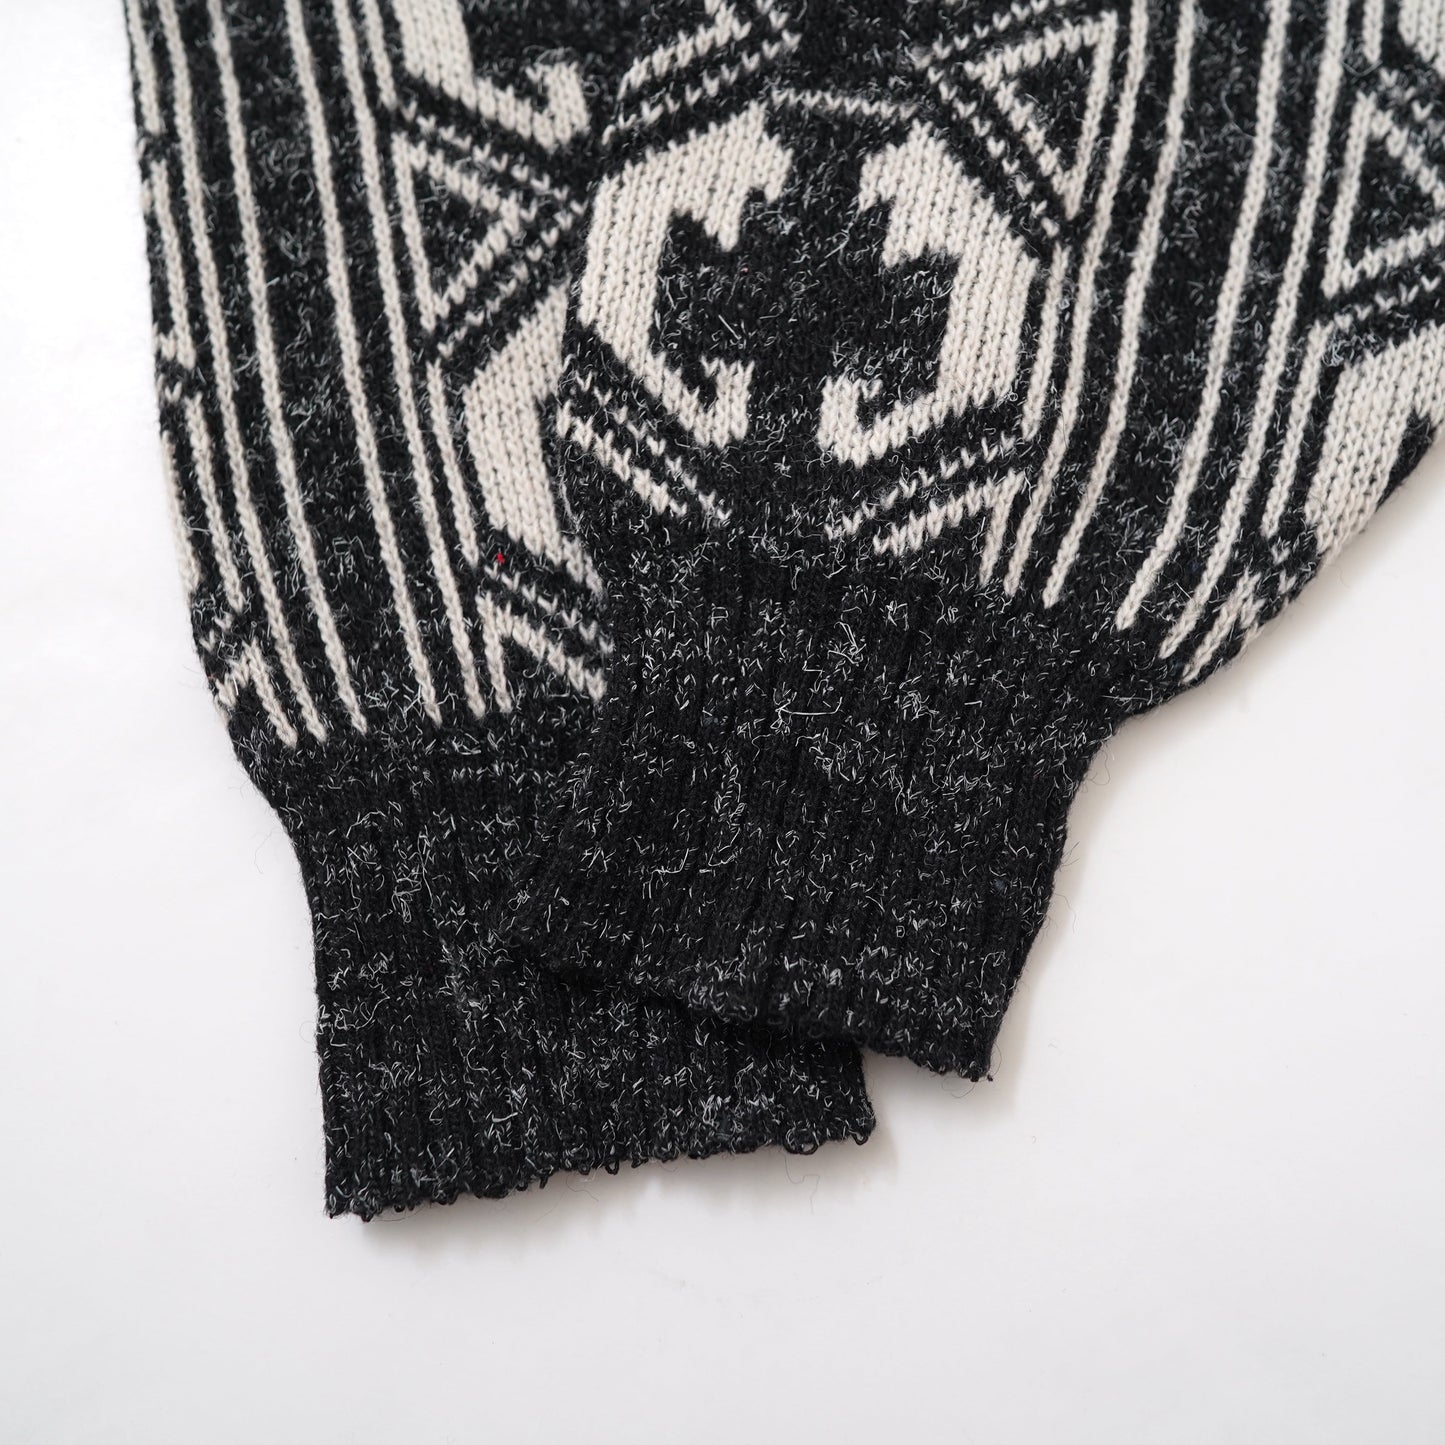 Pattern sweater